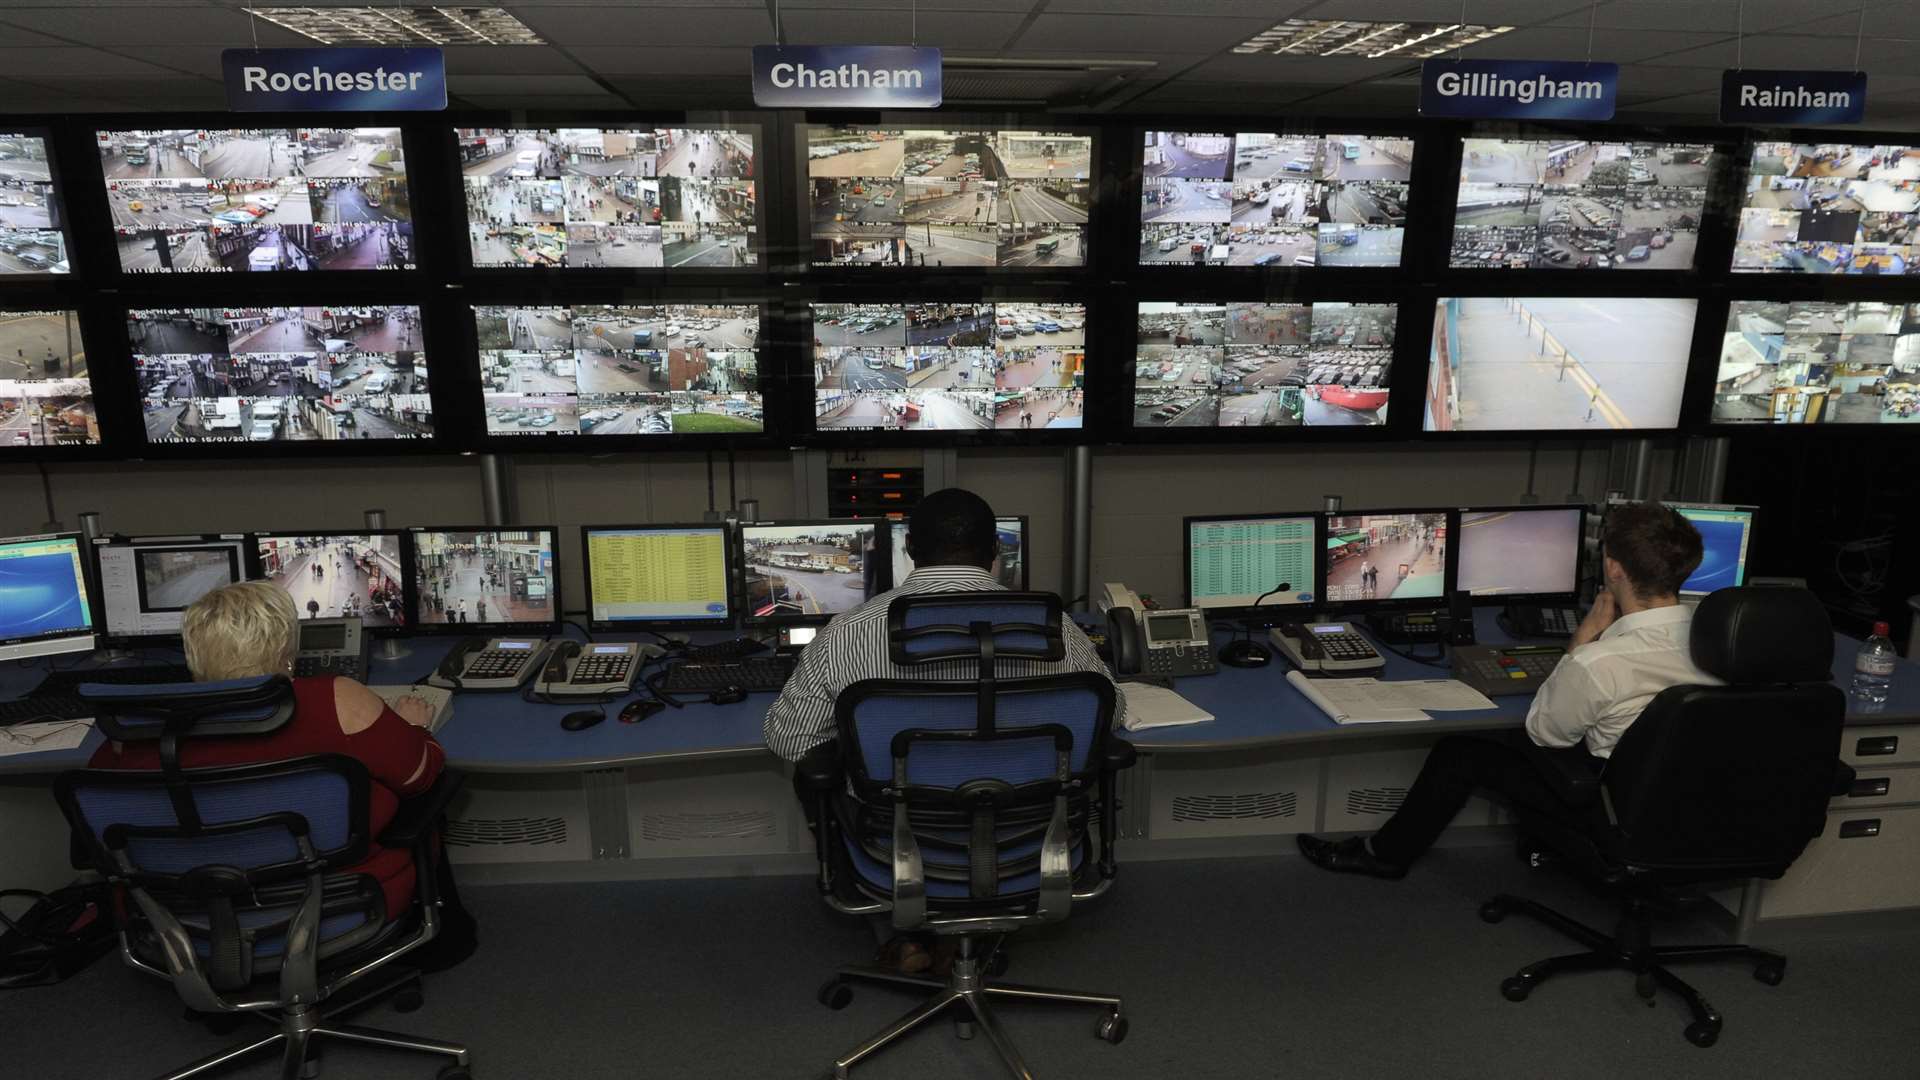 The CCTV centre